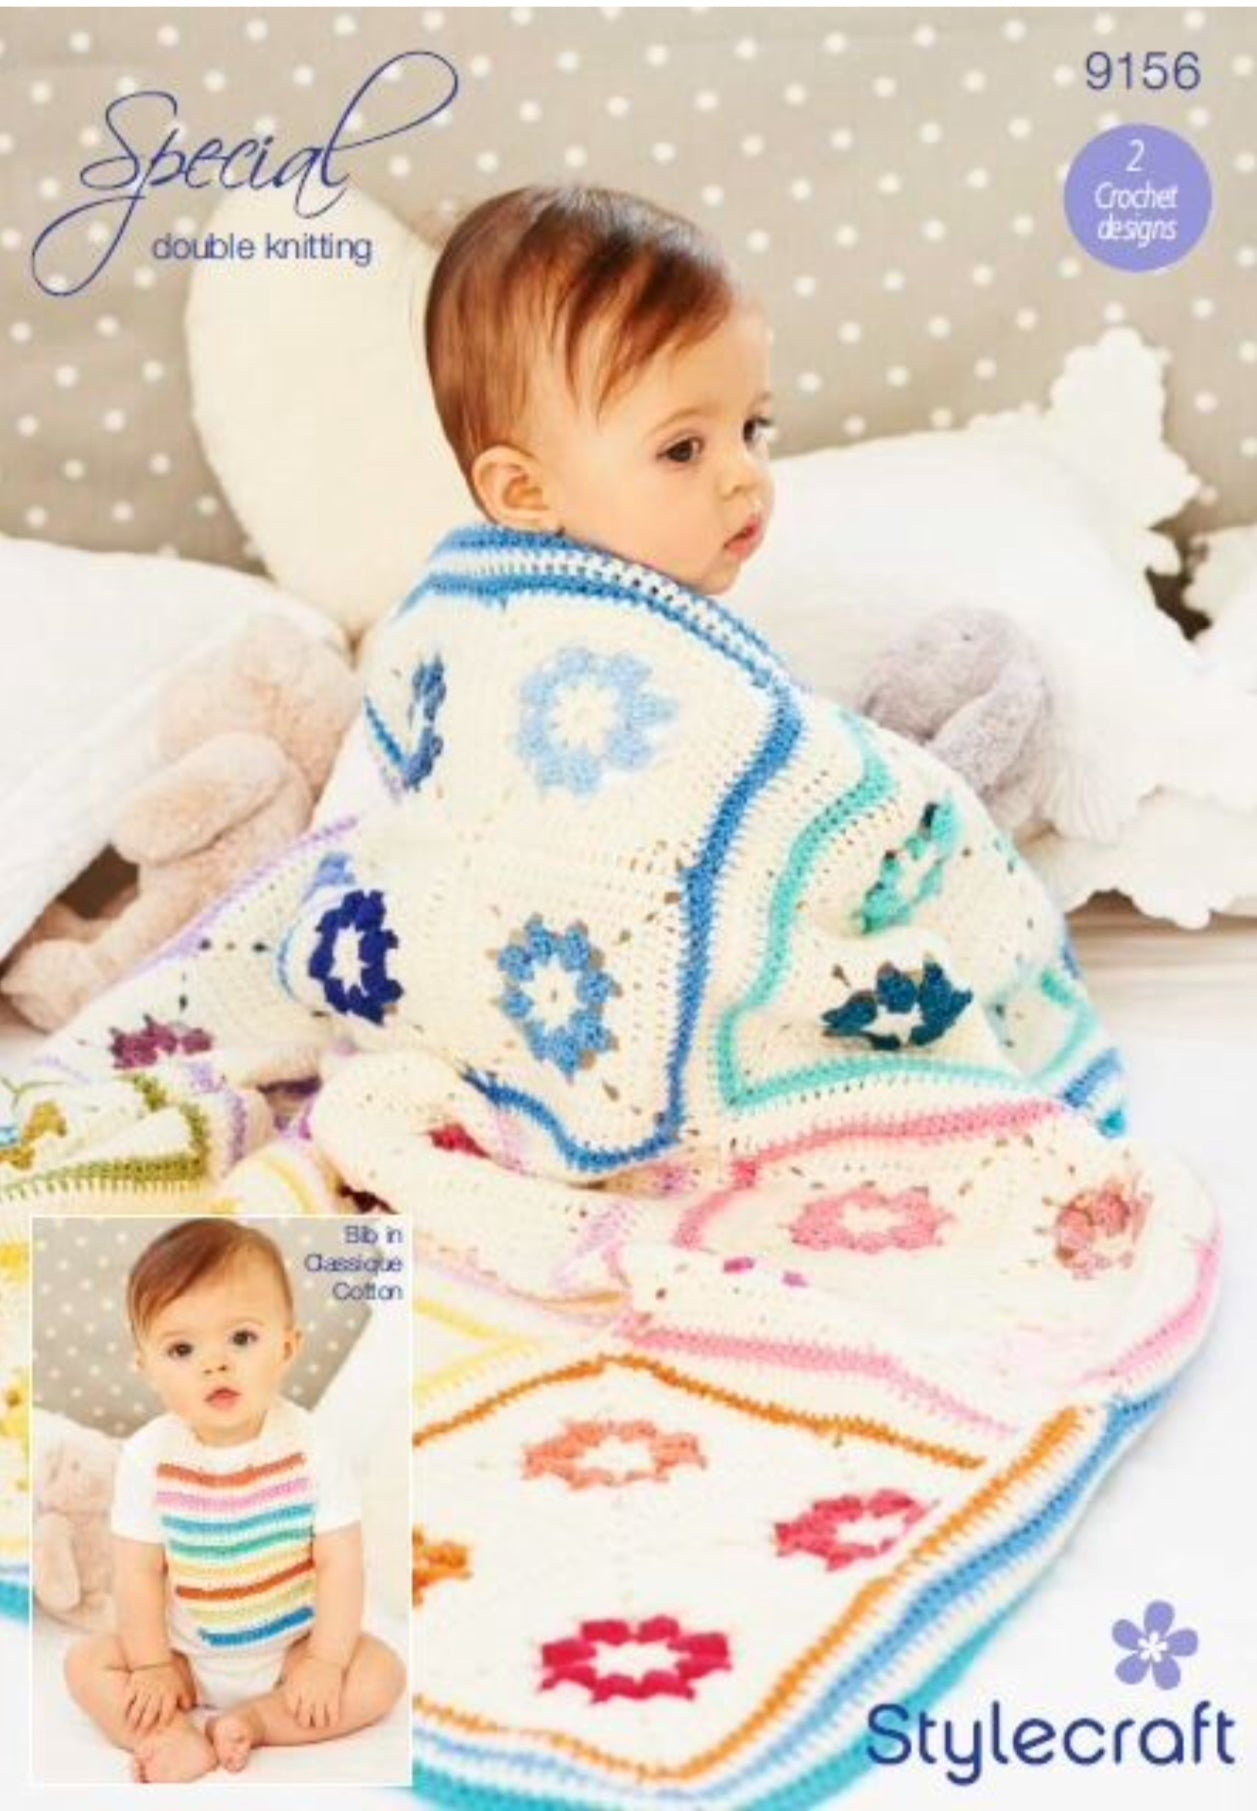 Crochet Daisy Square Blanket and Baby Bib